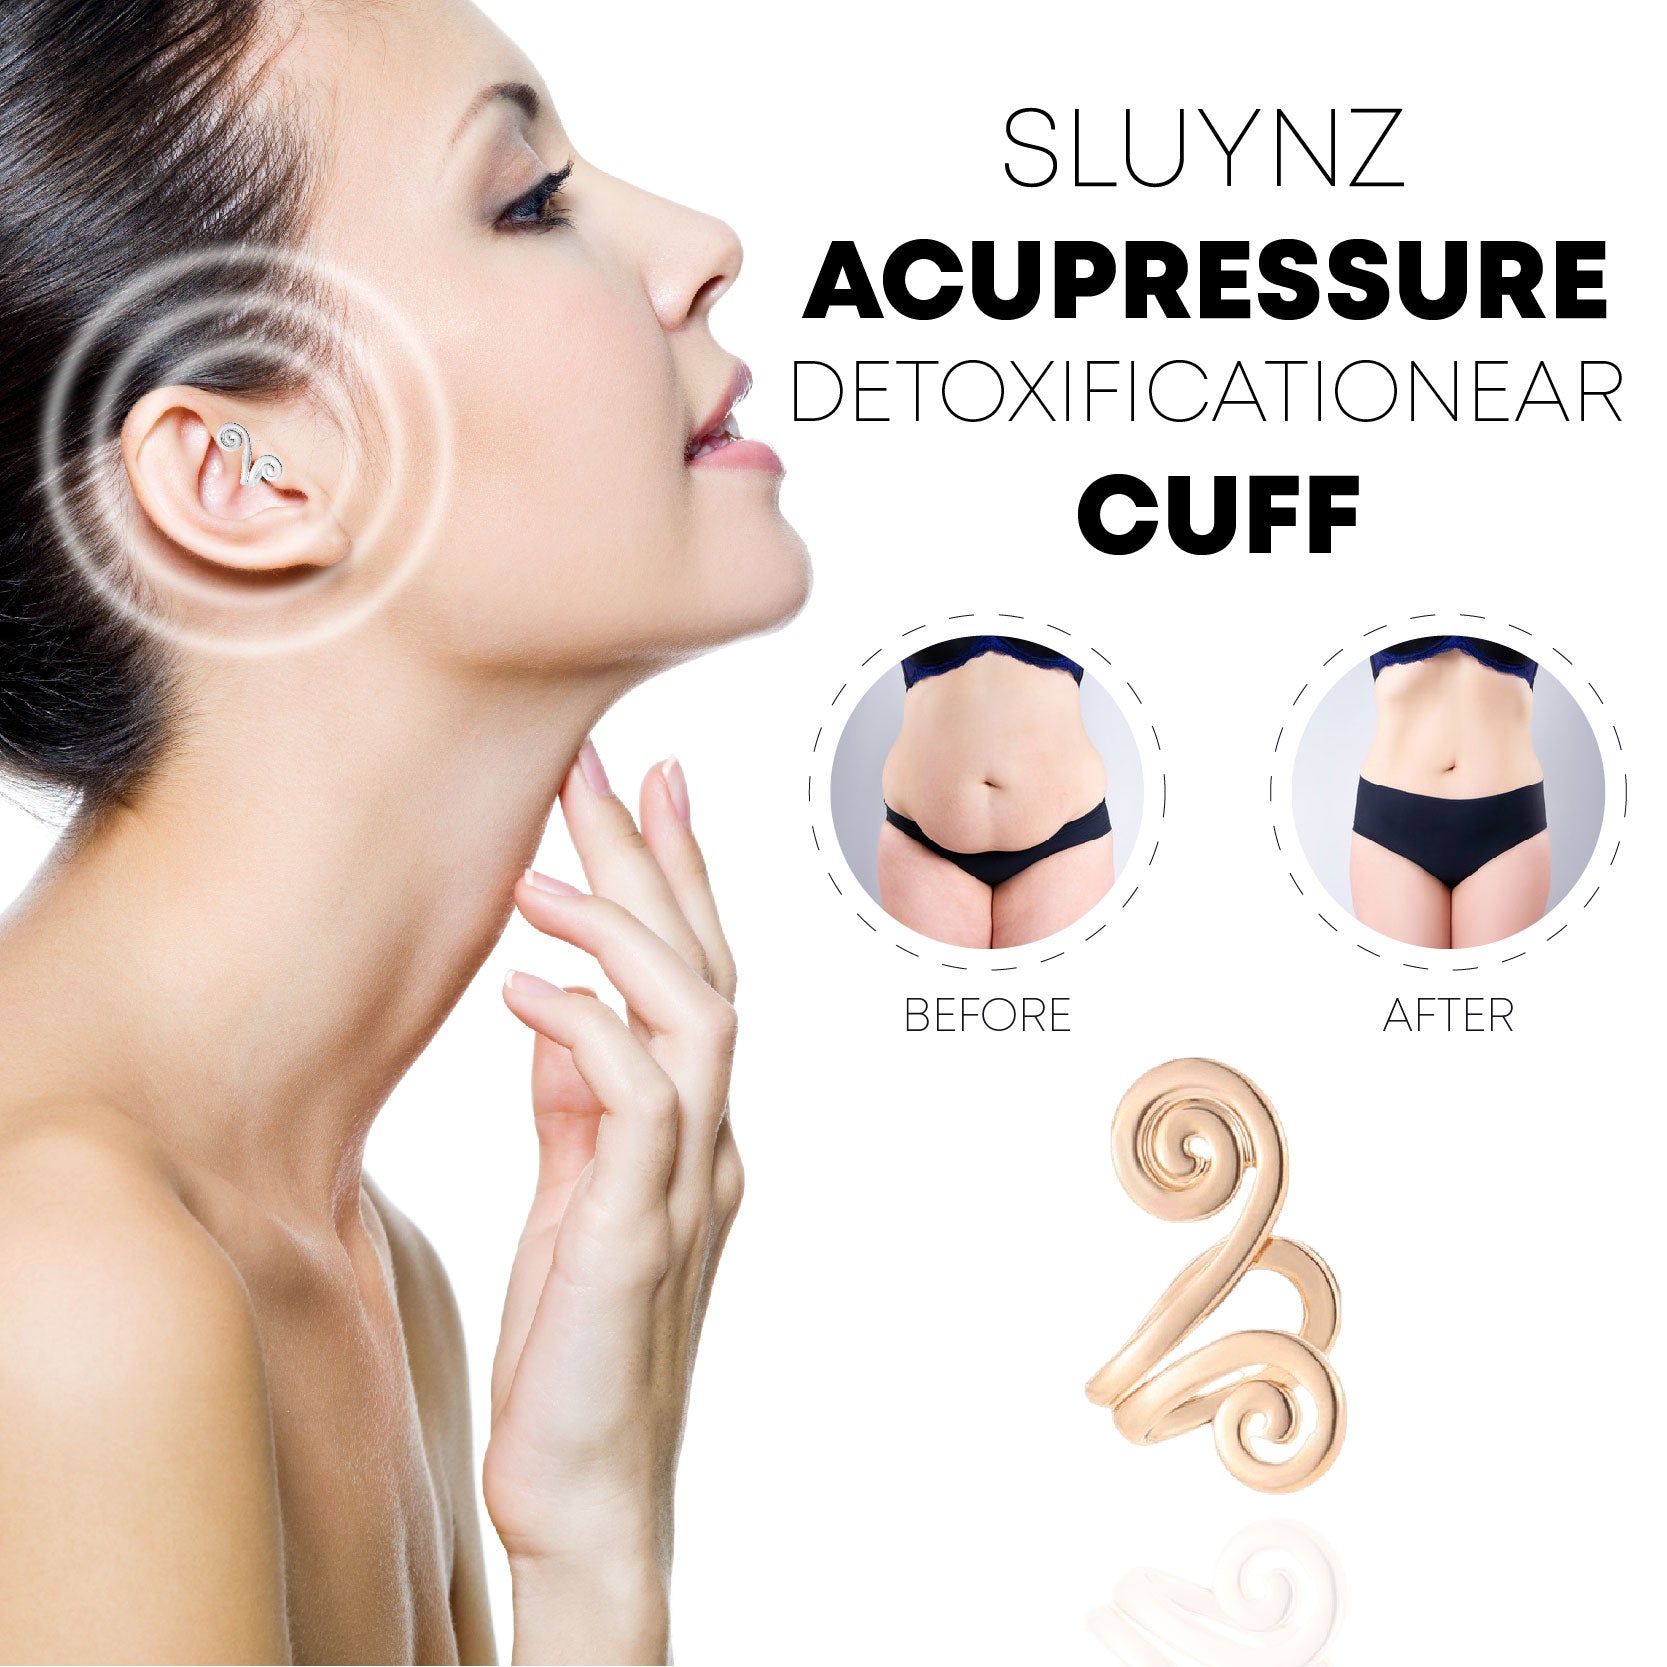 SLUYNZ Acupressure DetoxificationEar Cuff